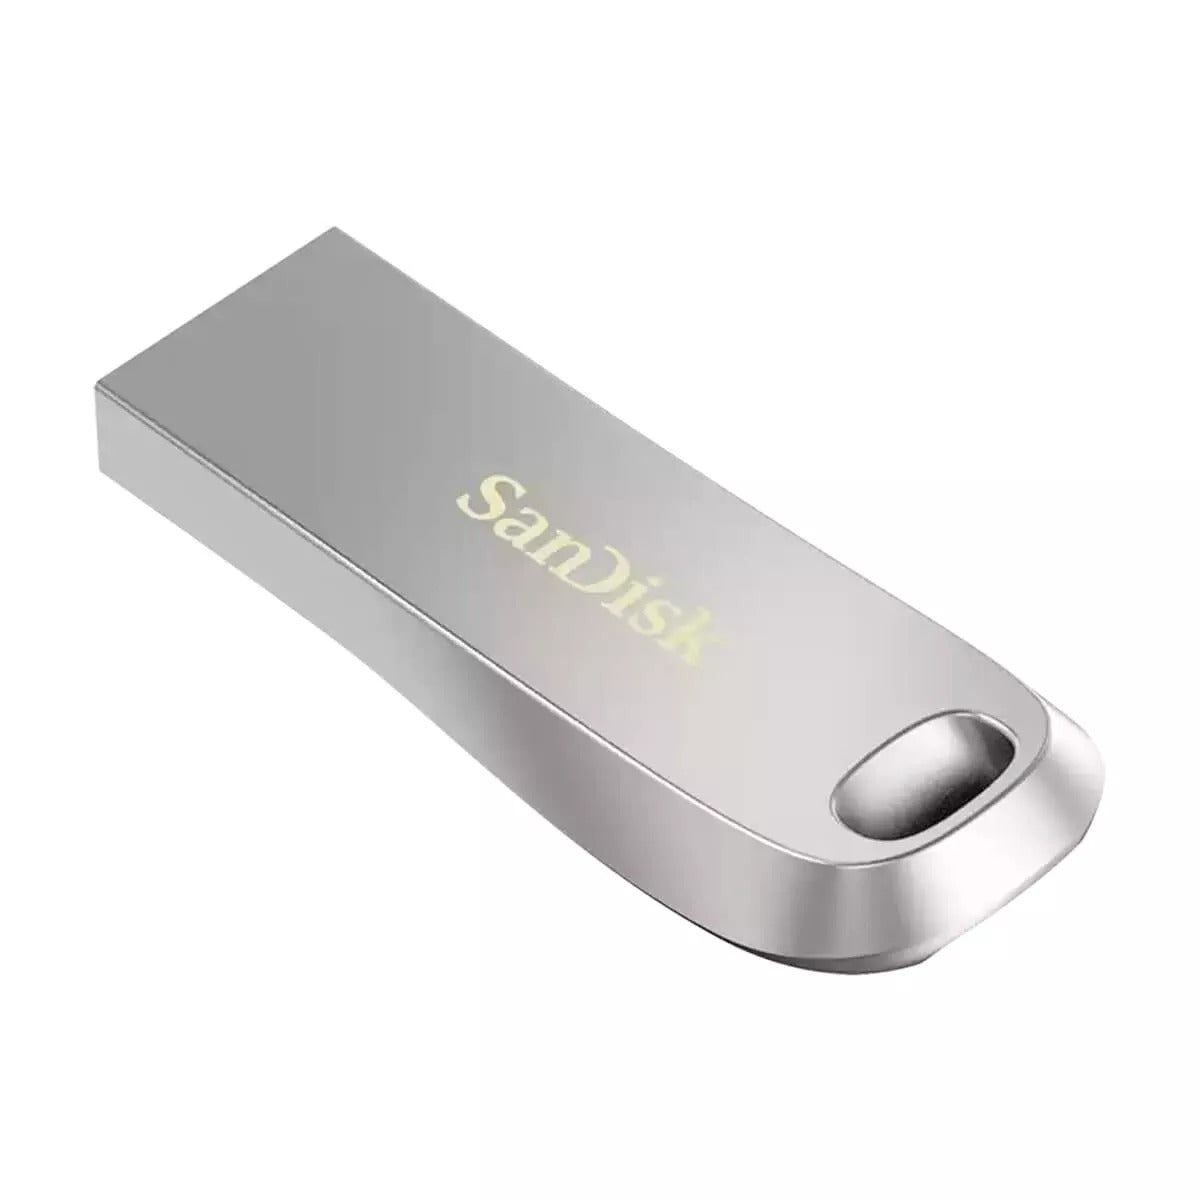 SanDisk SanDisk Ultra Luxe™ USB 3.1 Flash Drive , SDCZ74-128G-G46